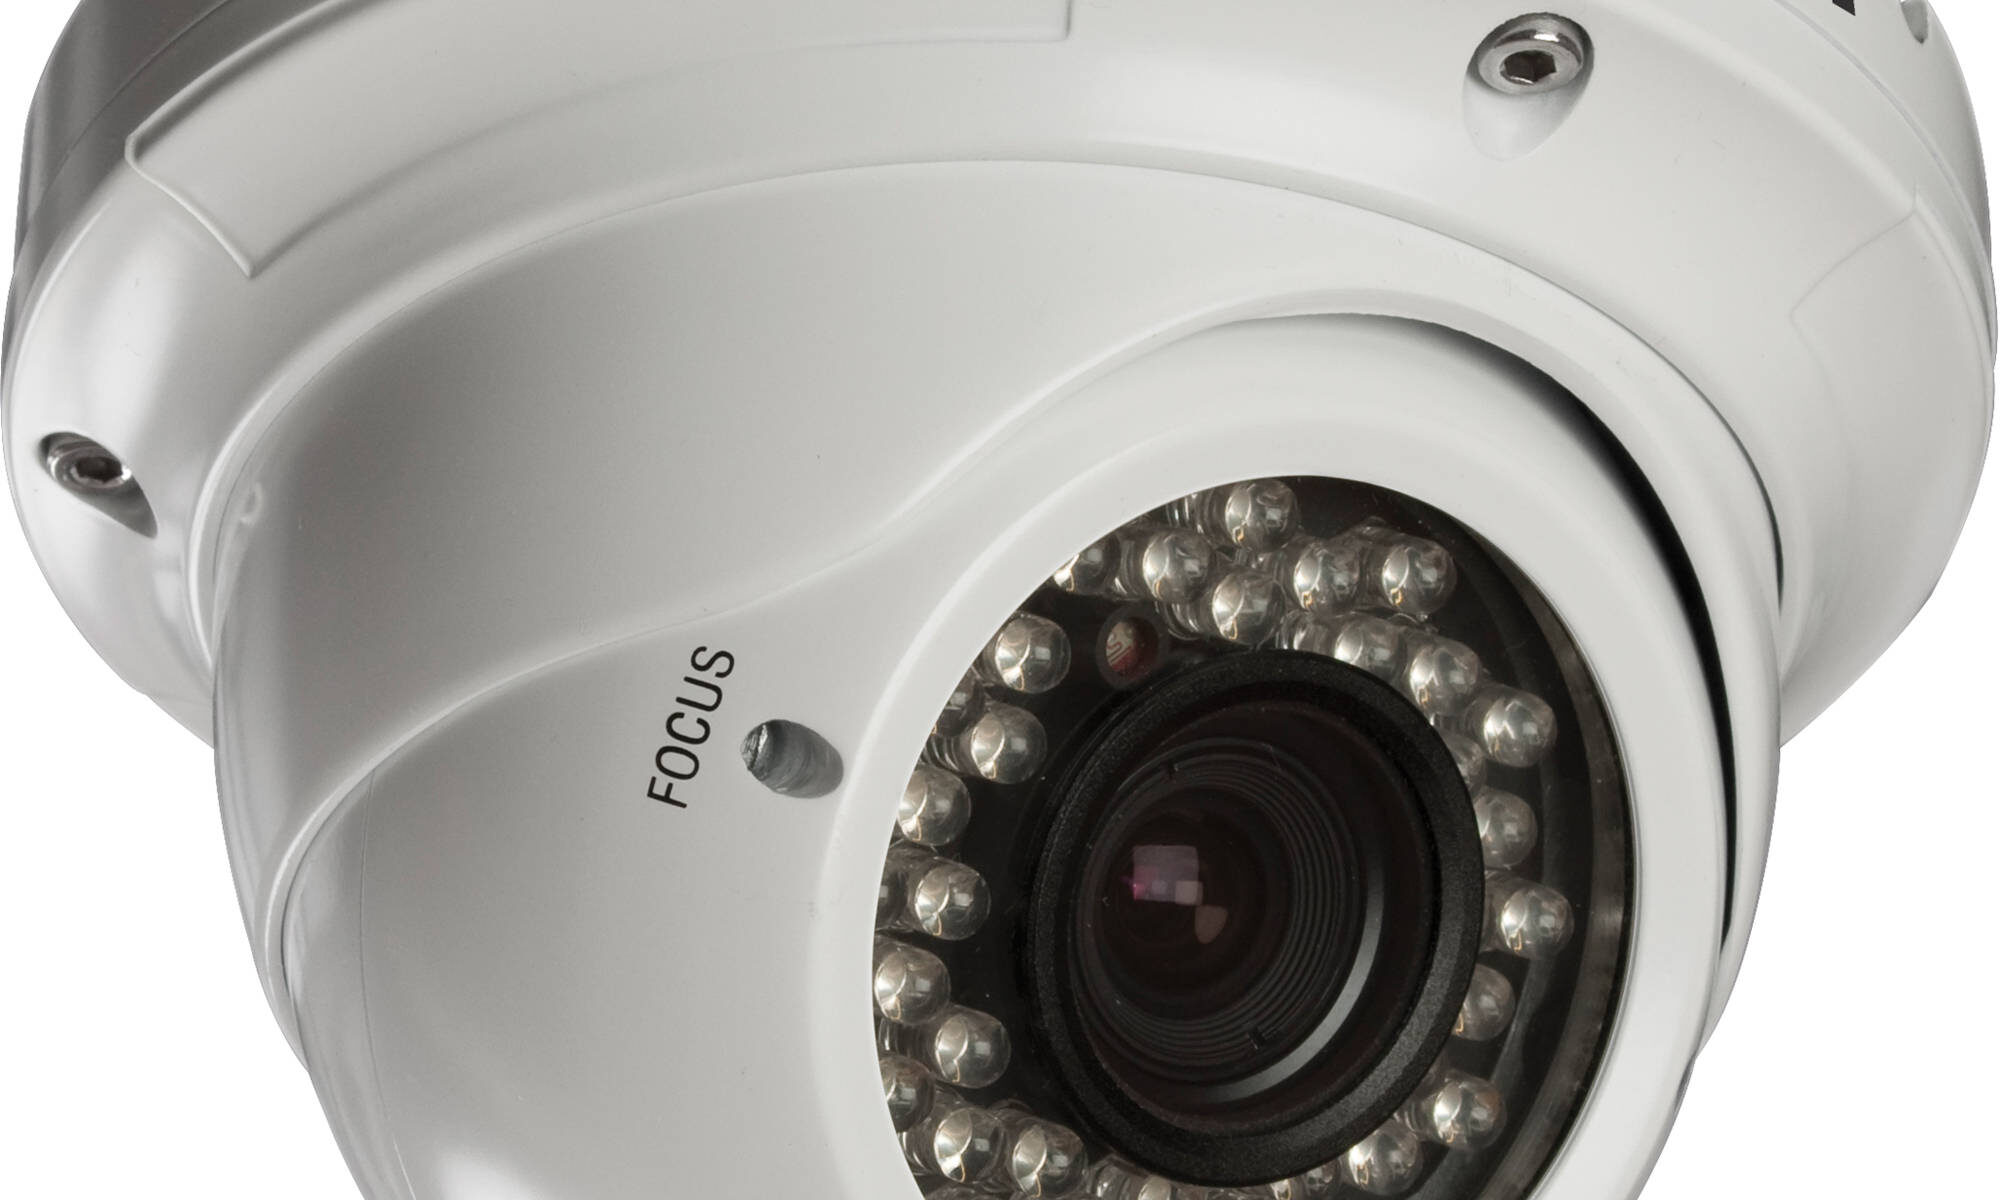 Camera Systems CCTV in Dayton, Columbus, Cincinnati, Ohio